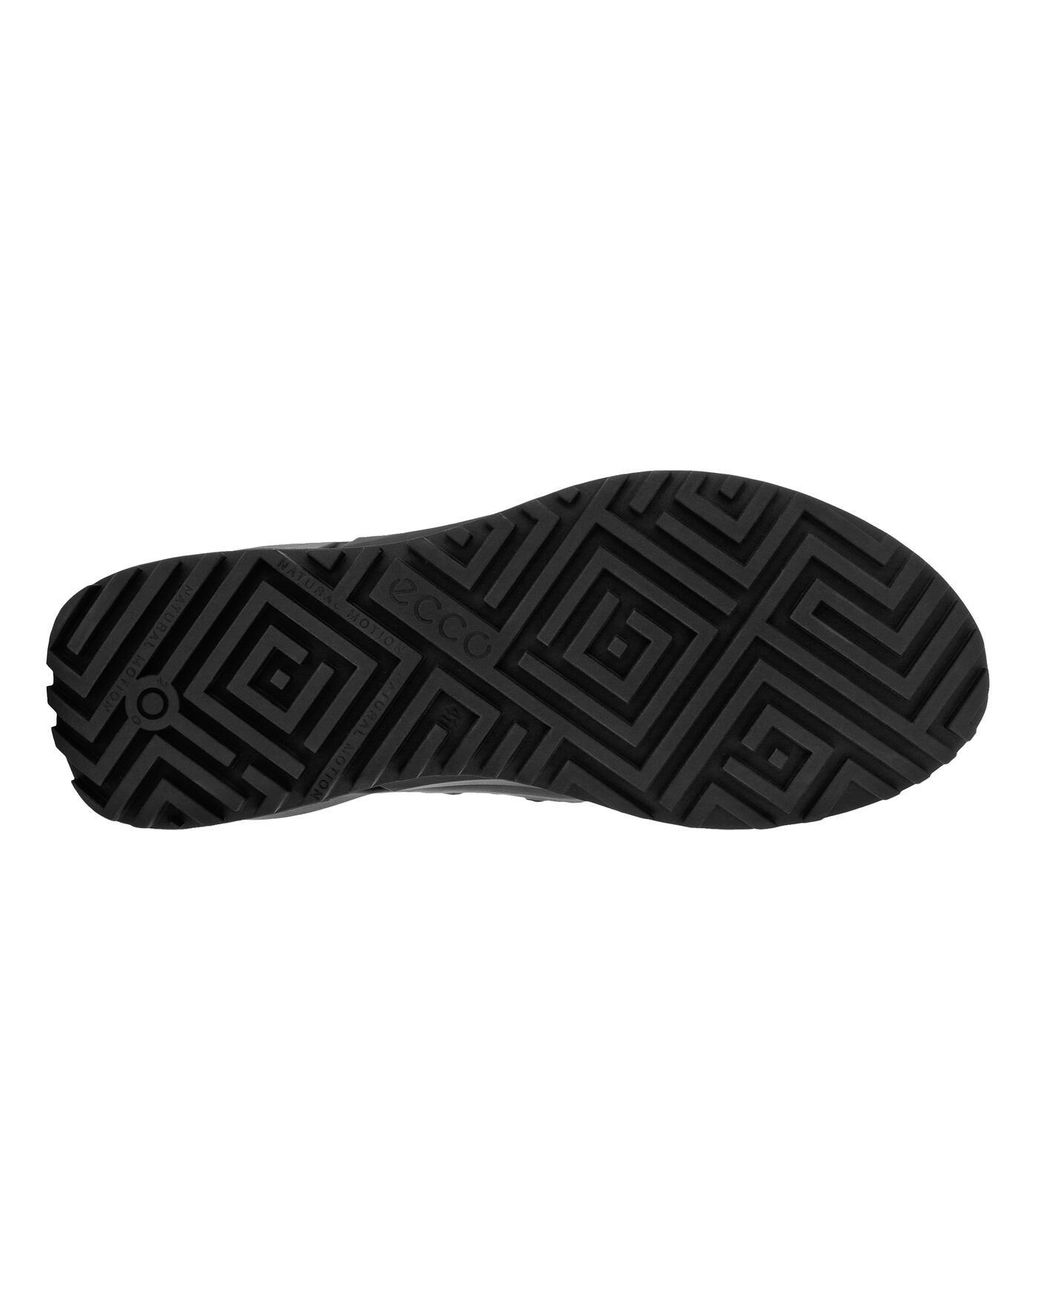 Ecco Biom 2. 0 Gore-tex Sneaker Adult Size in Black for Men | Lyst